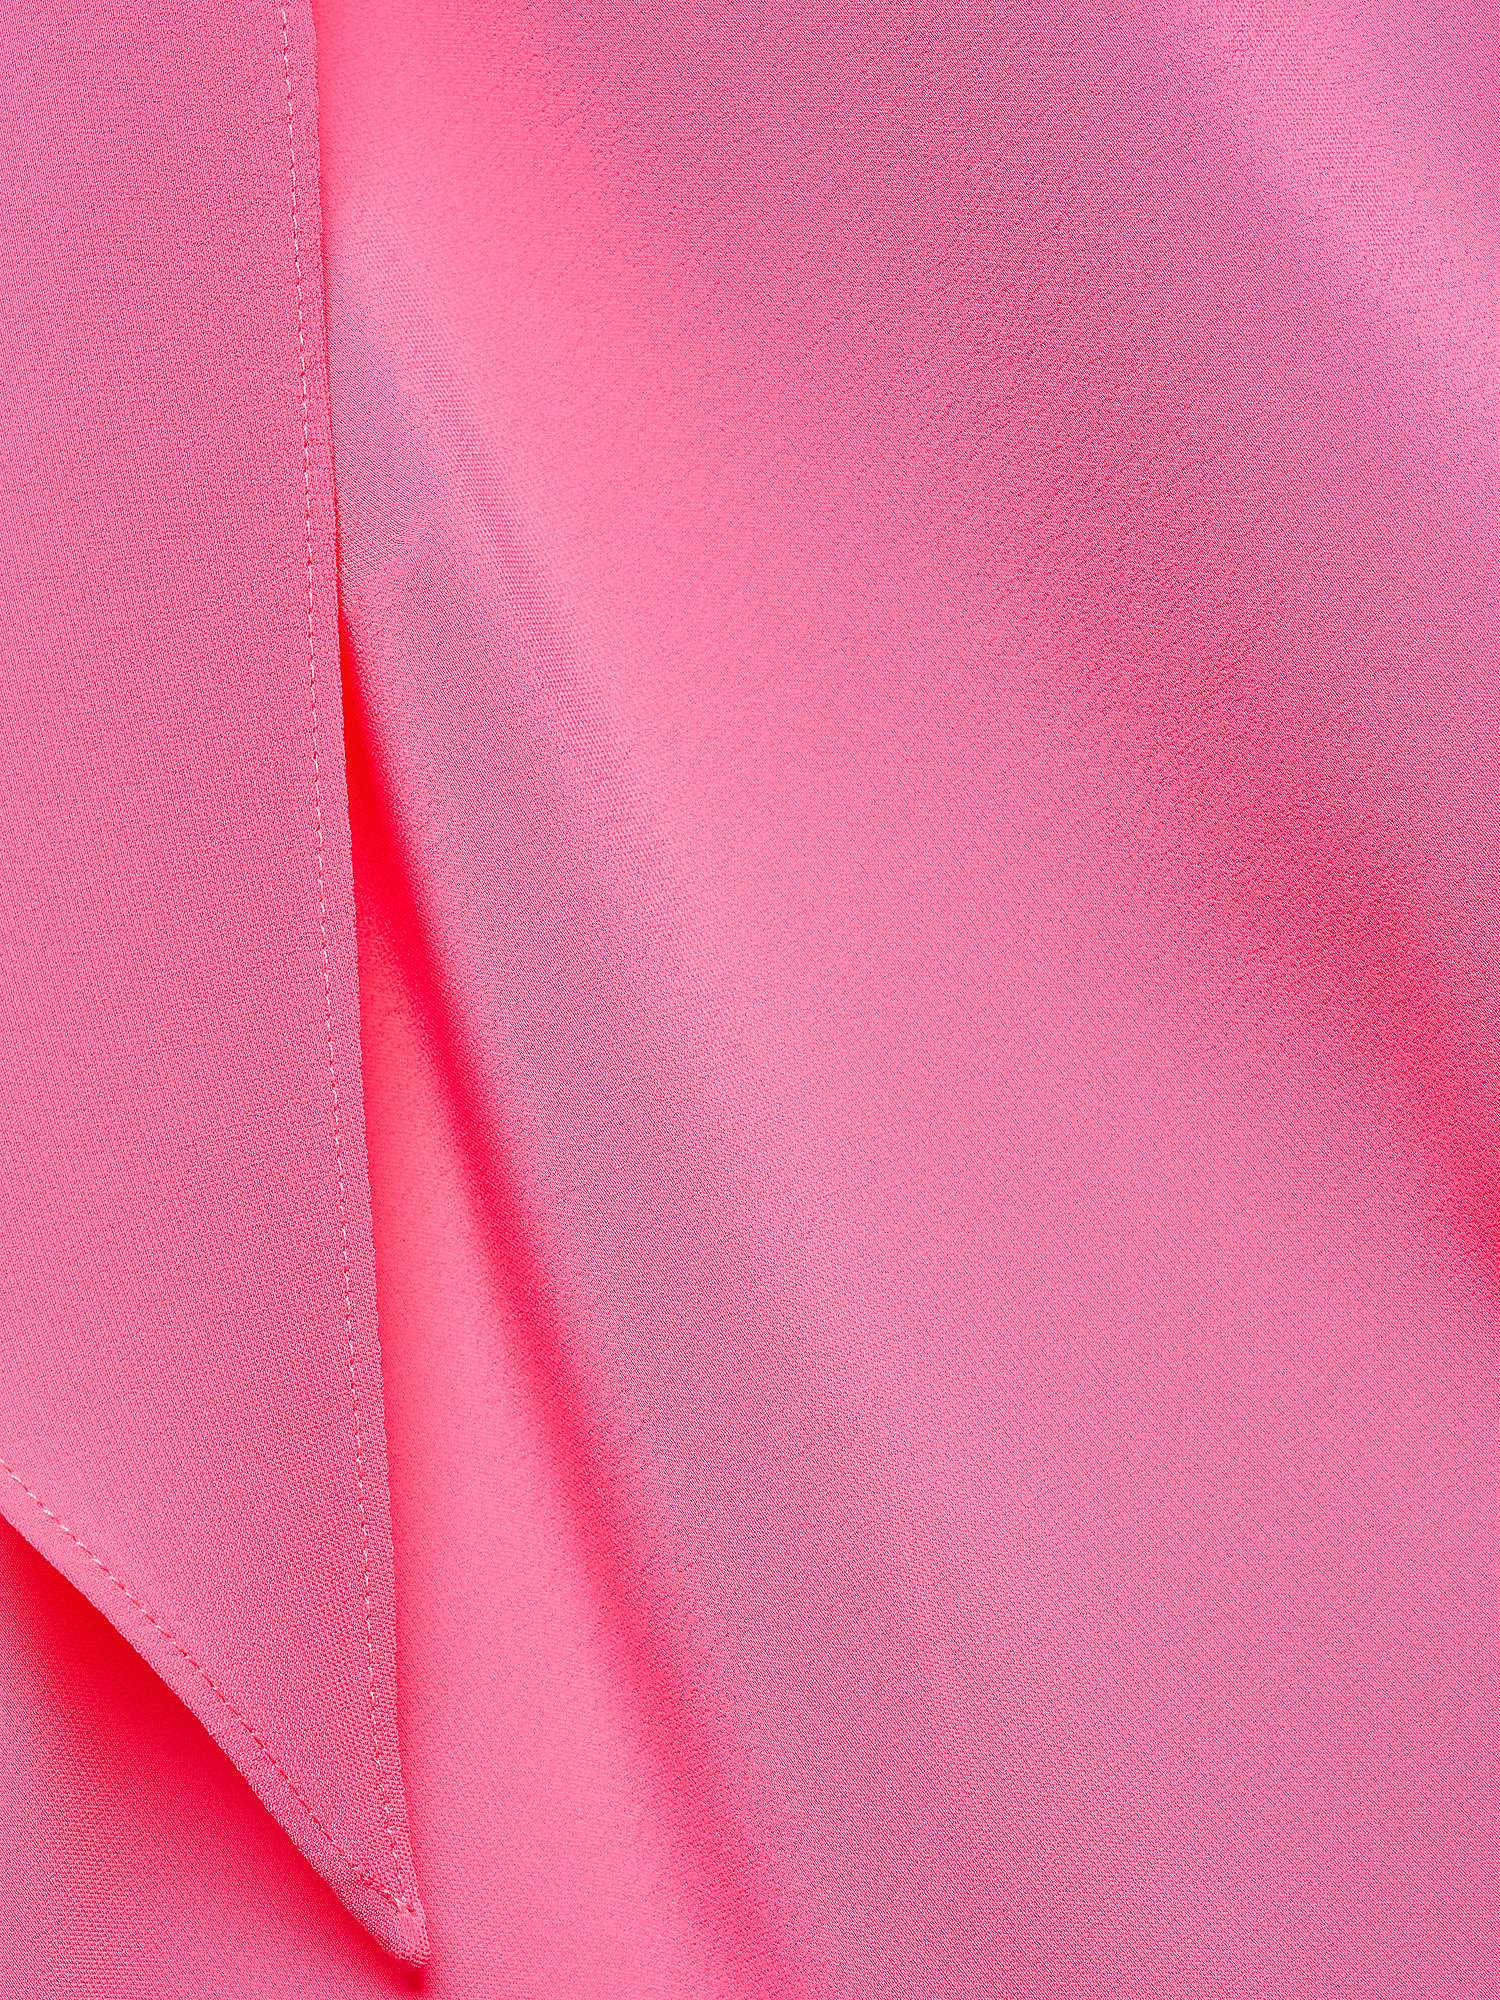 Buy Mango Lazaro Asymmetric Bow Maxi Dress, Pink Online at johnlewis.com